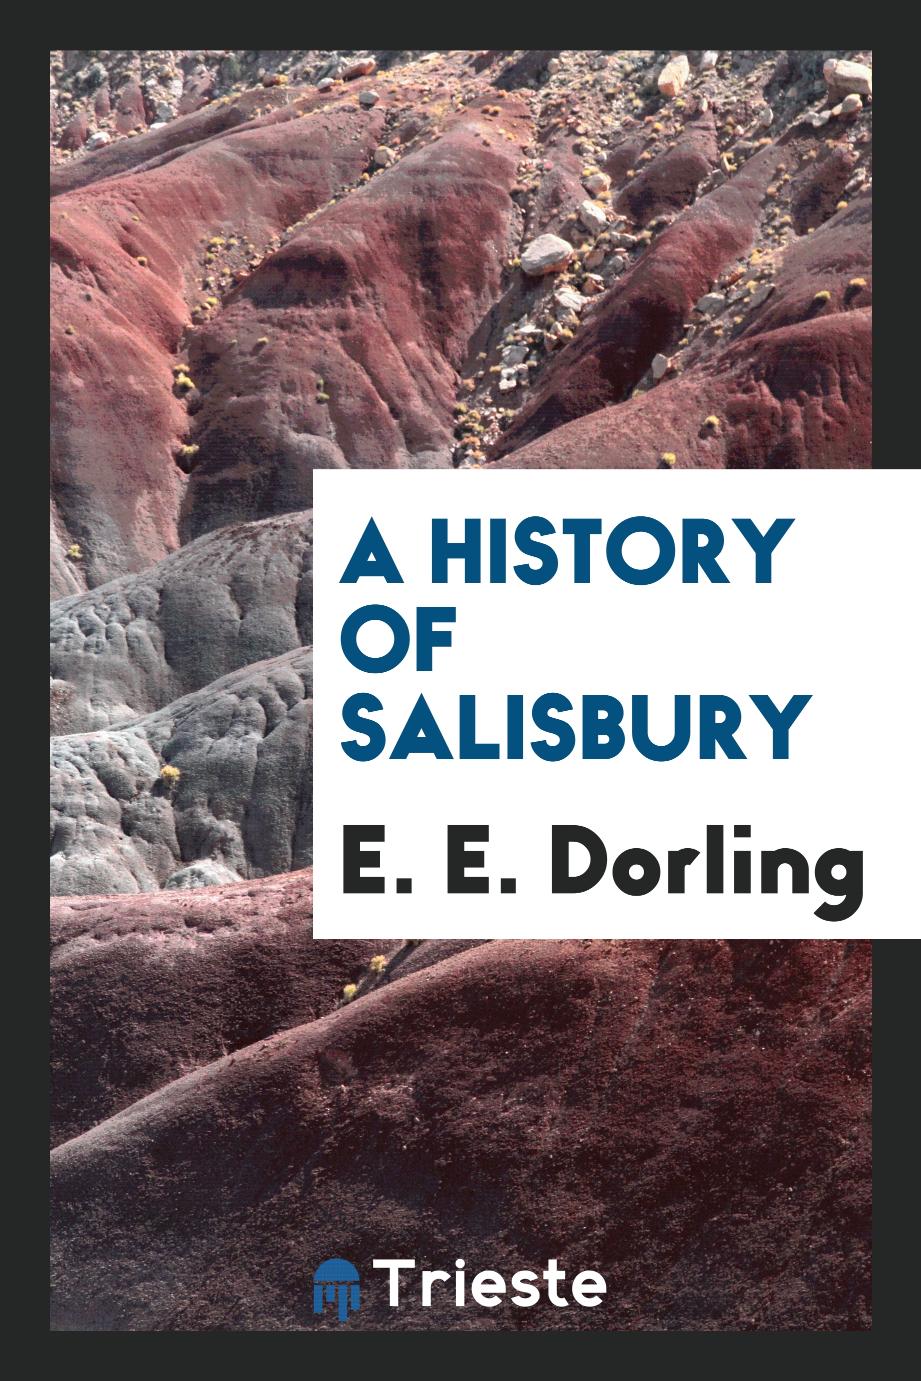 A history of Salisbury